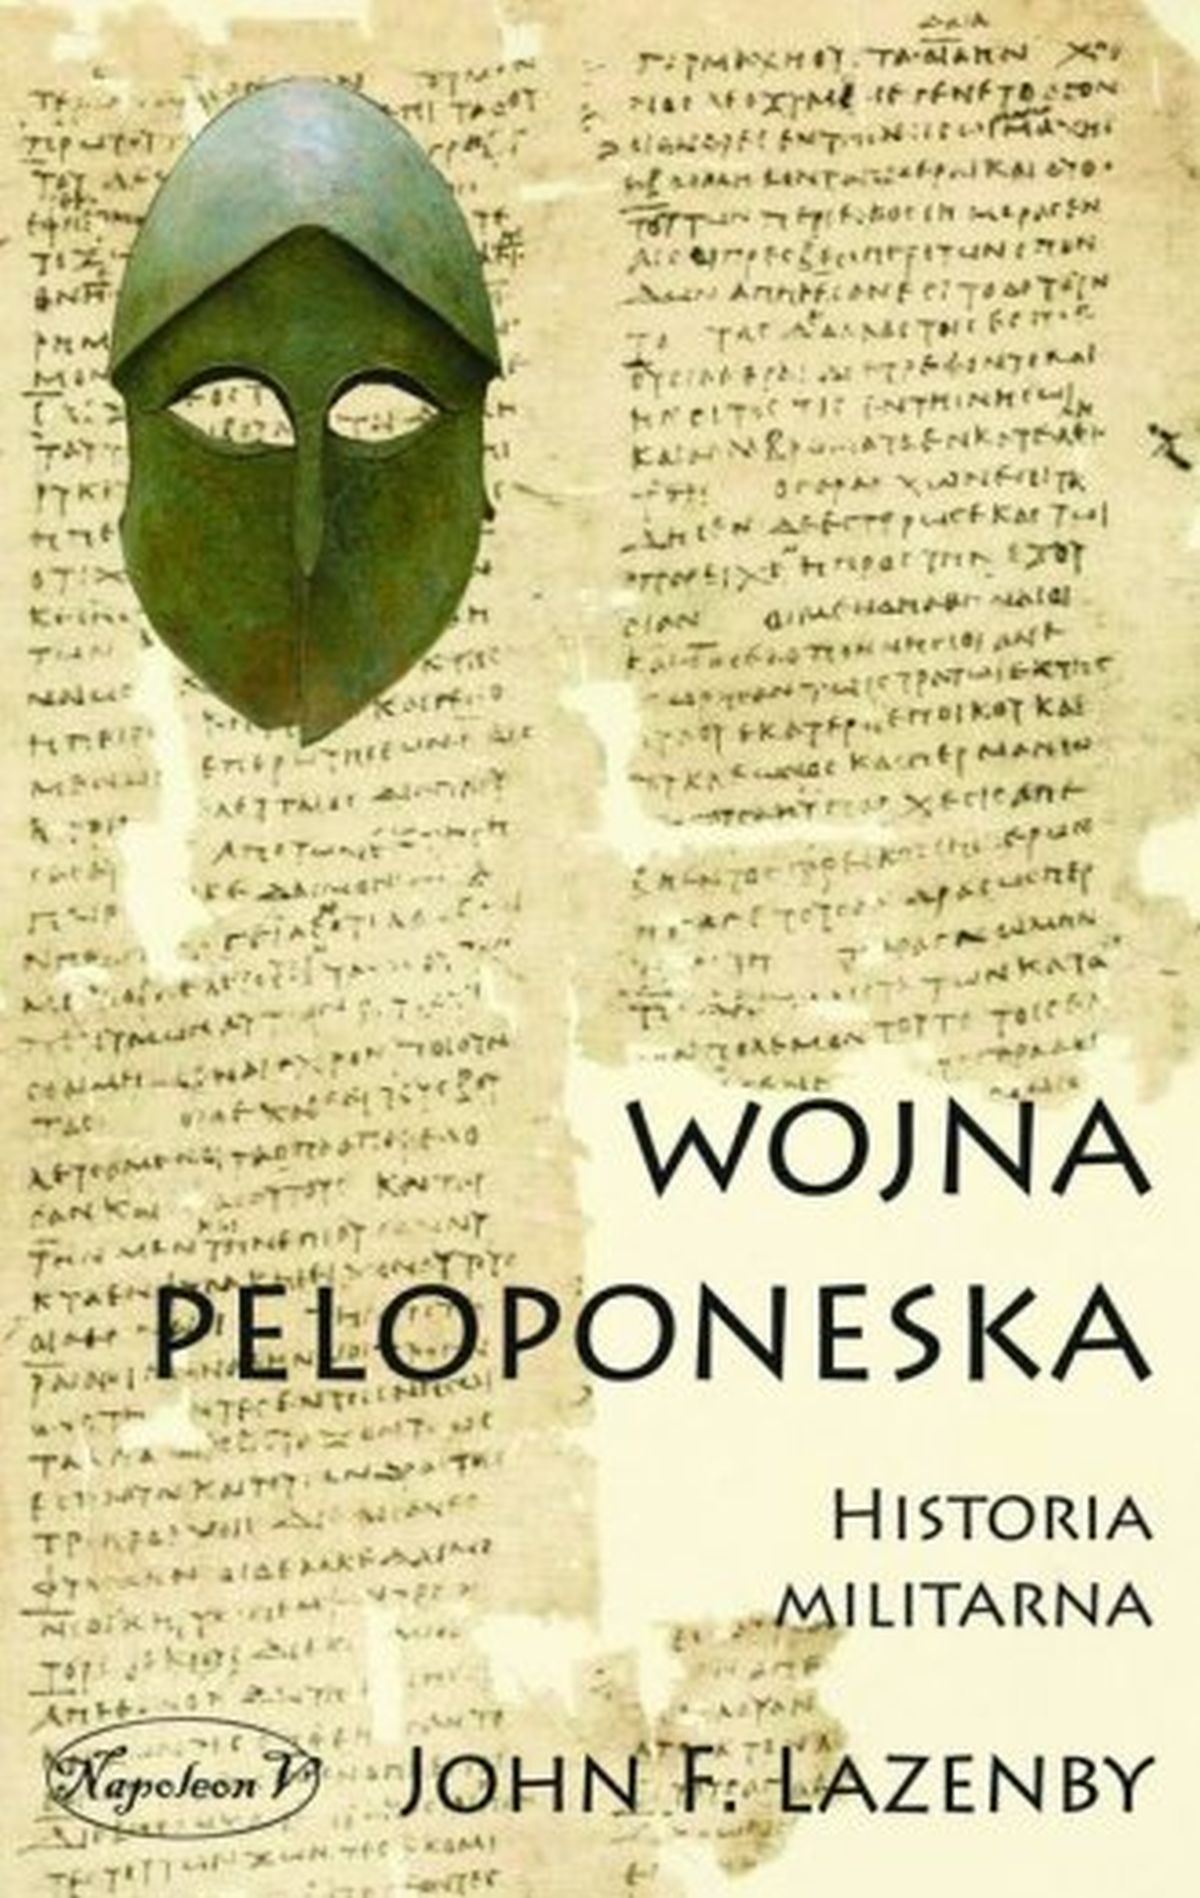 John F. Lazenby, Wojna Peloponeska. Historia militarna